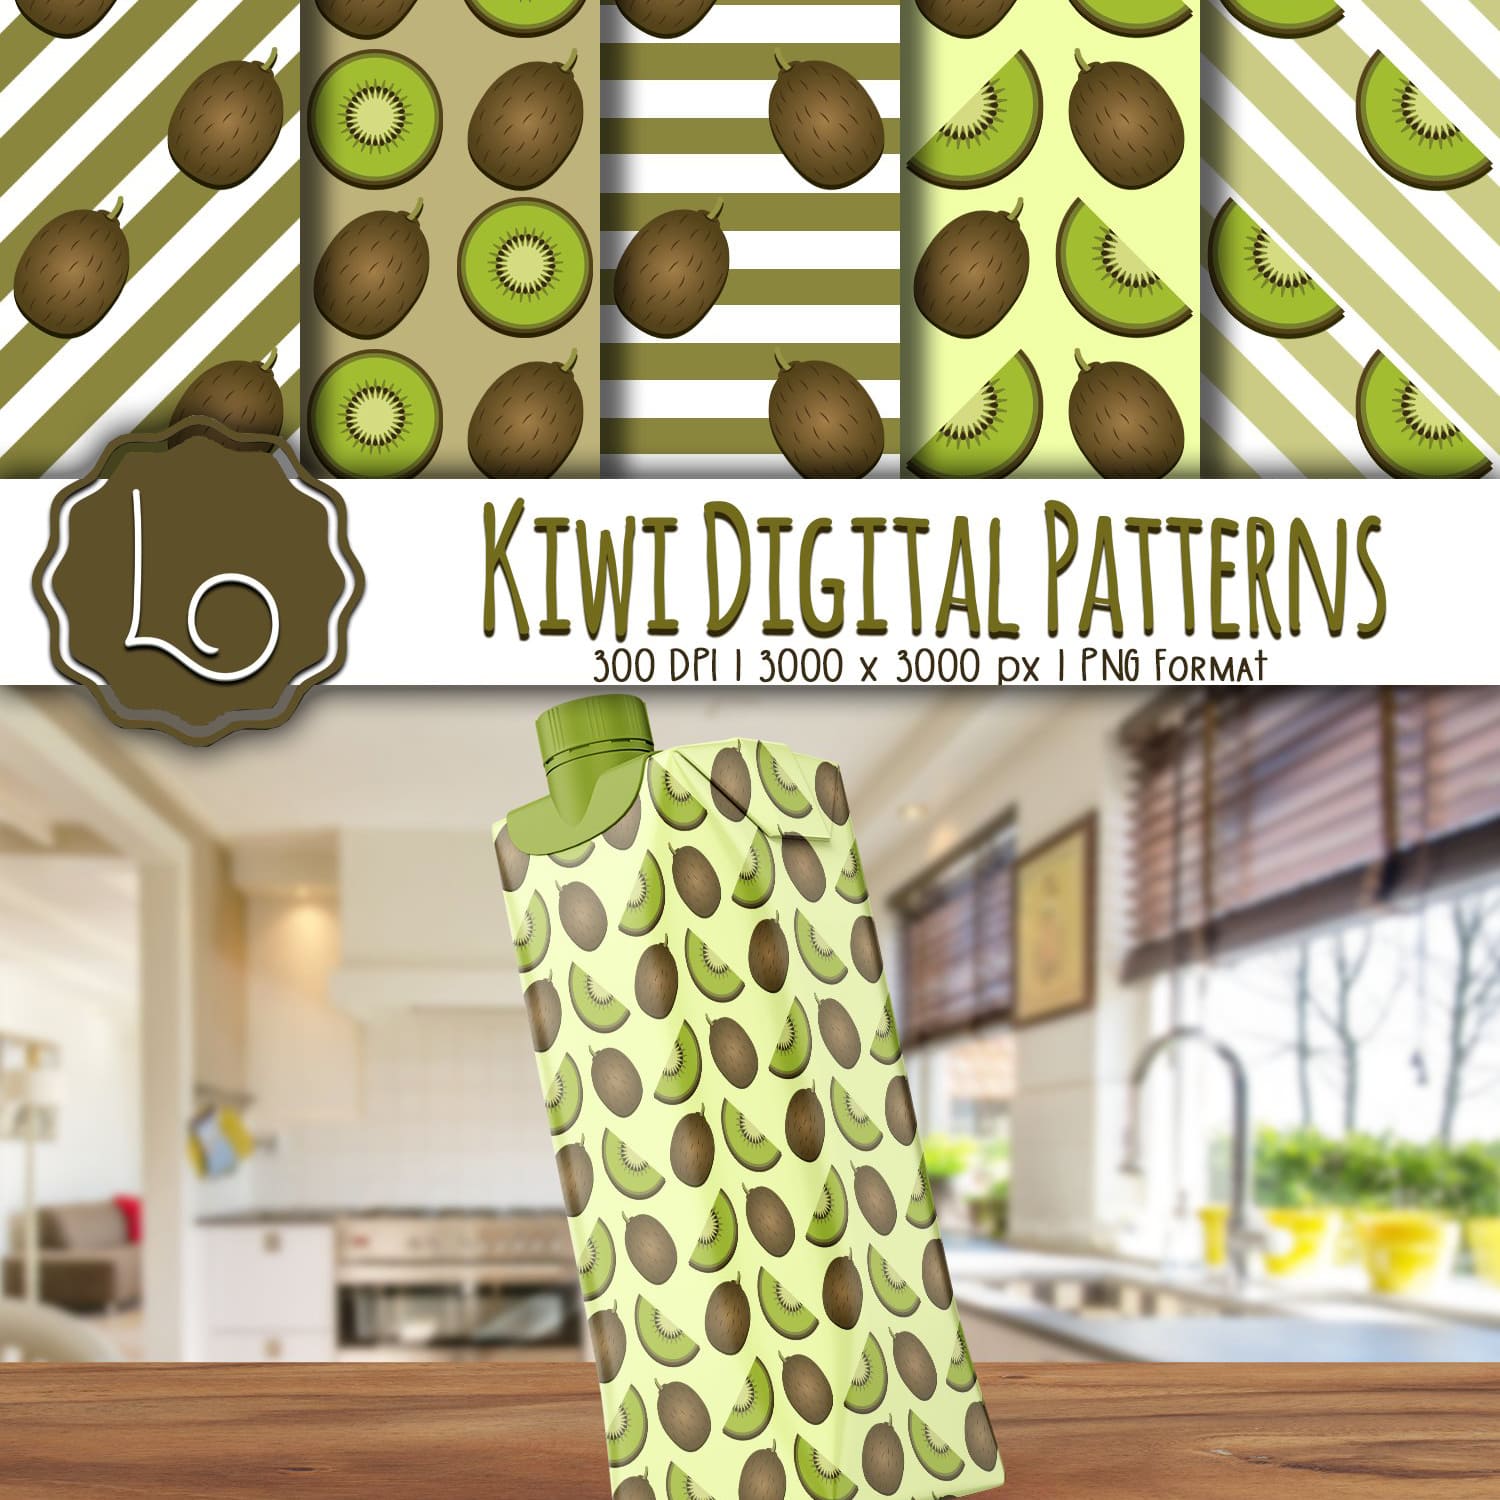 Kiwi Digital Patterns cover.